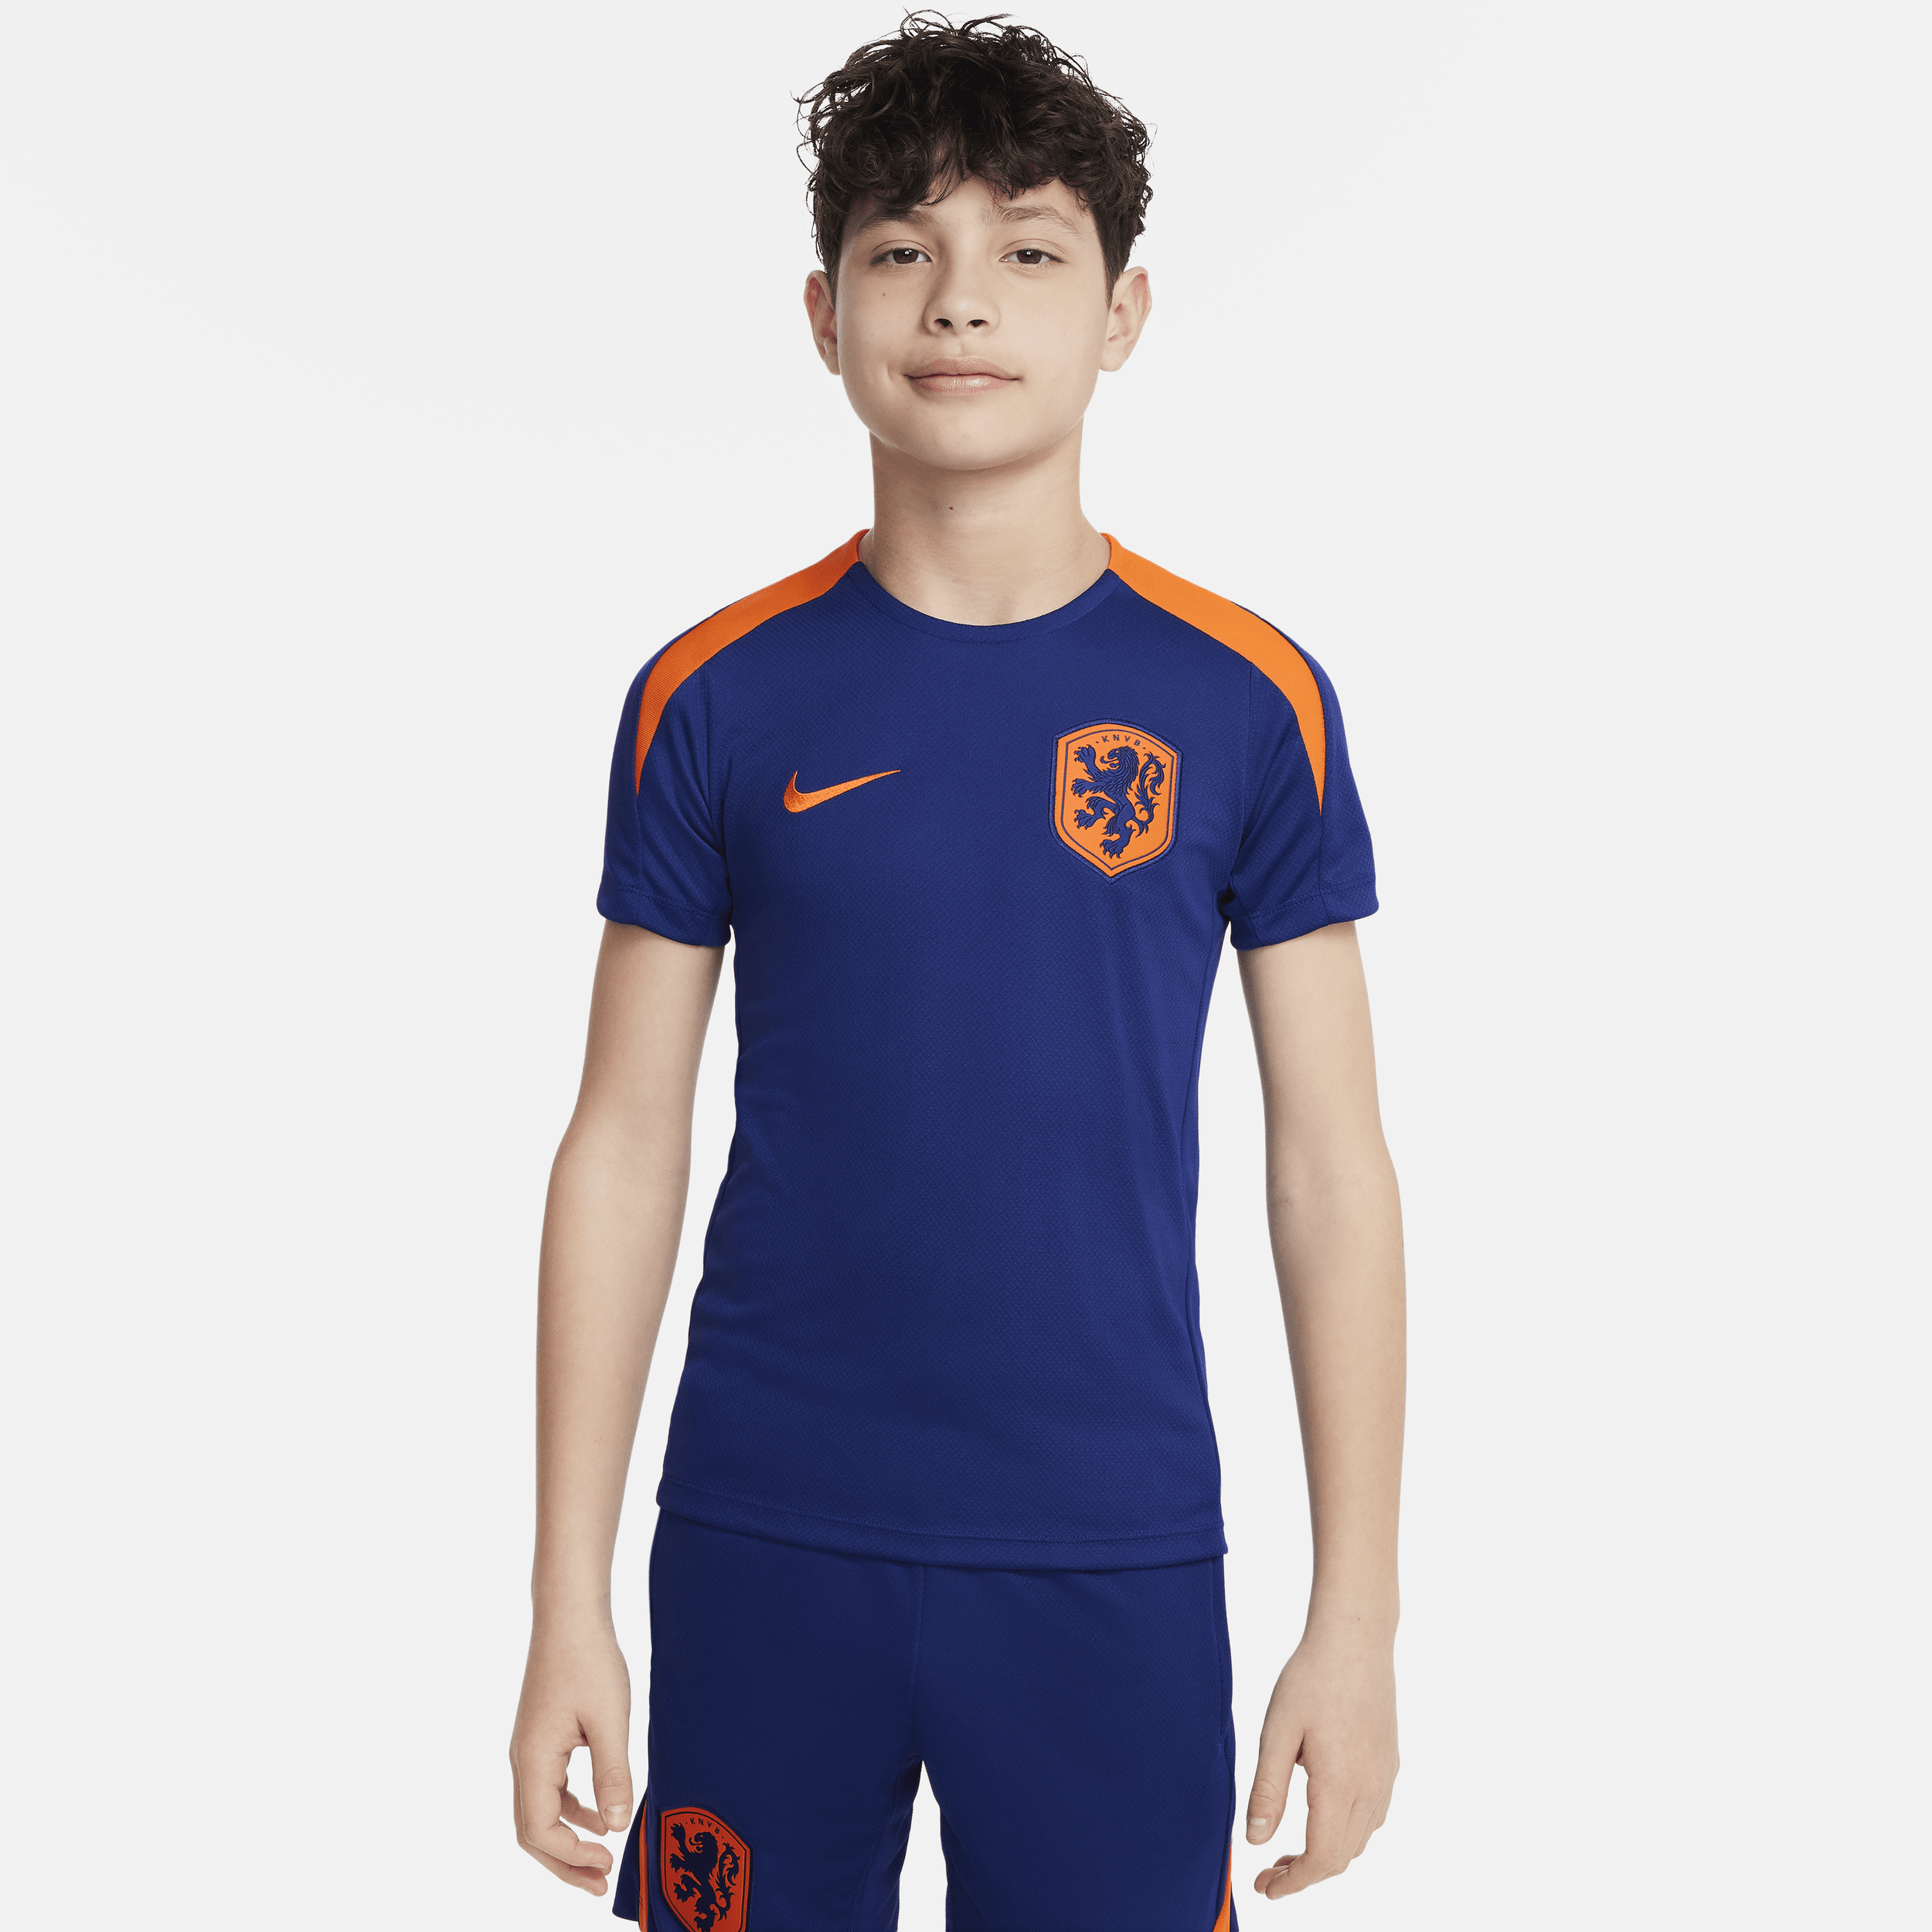 Nederland Strike Nike Dri-FIT knit voetbaltop met korte mouwen voor kids - Blauw